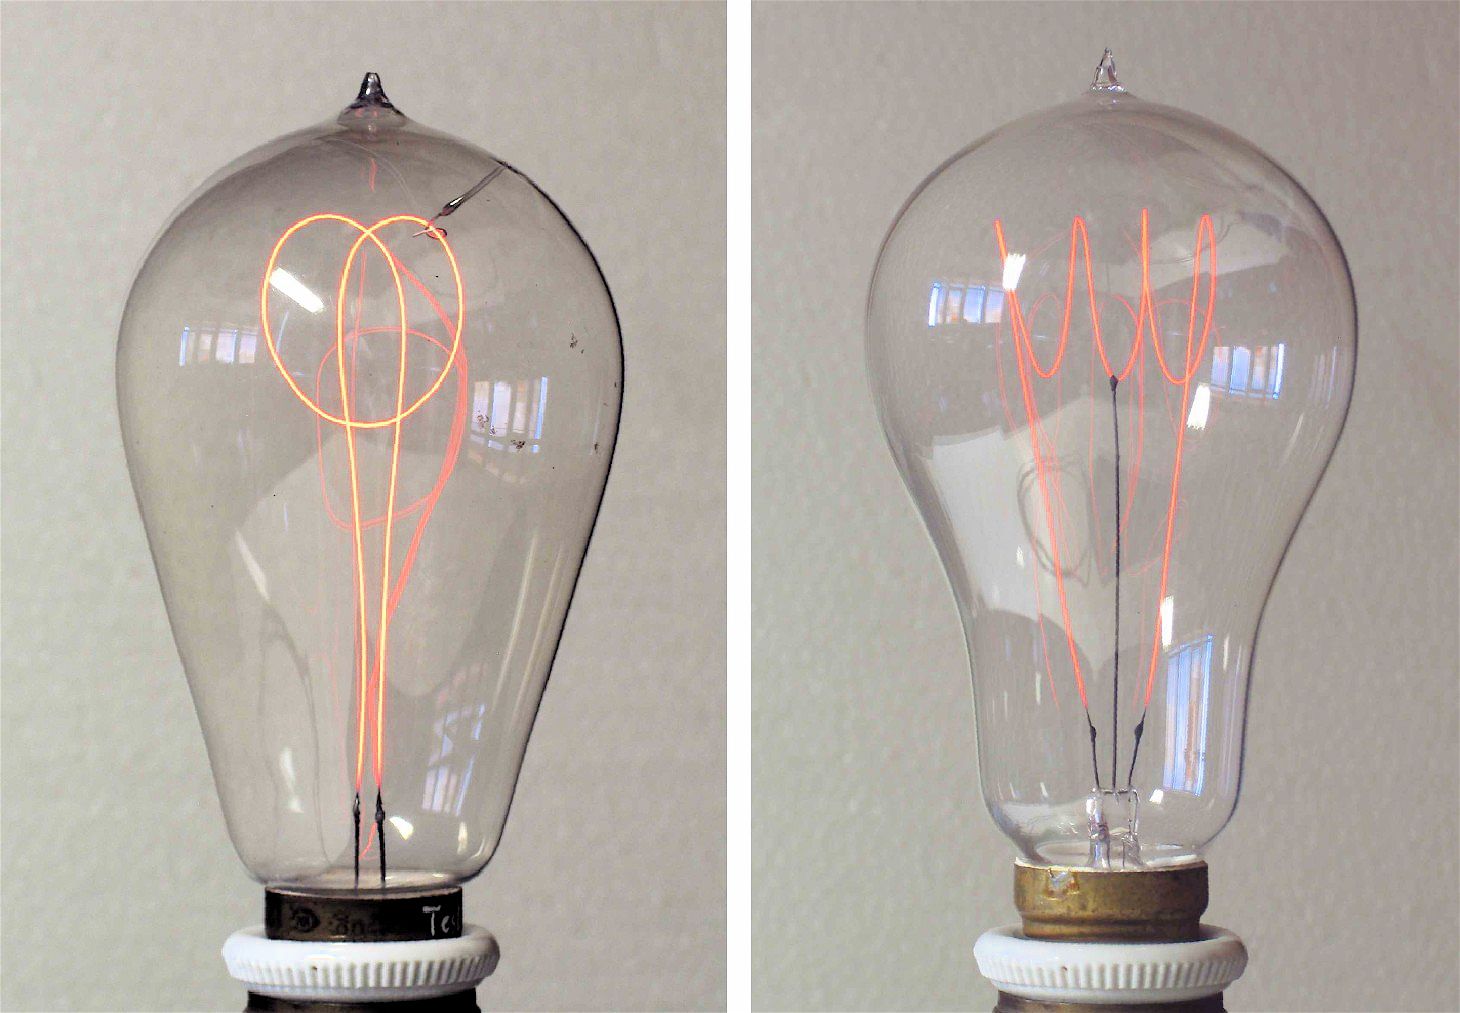 Lot de 4 lampes à incandescence
(filament de carbone)